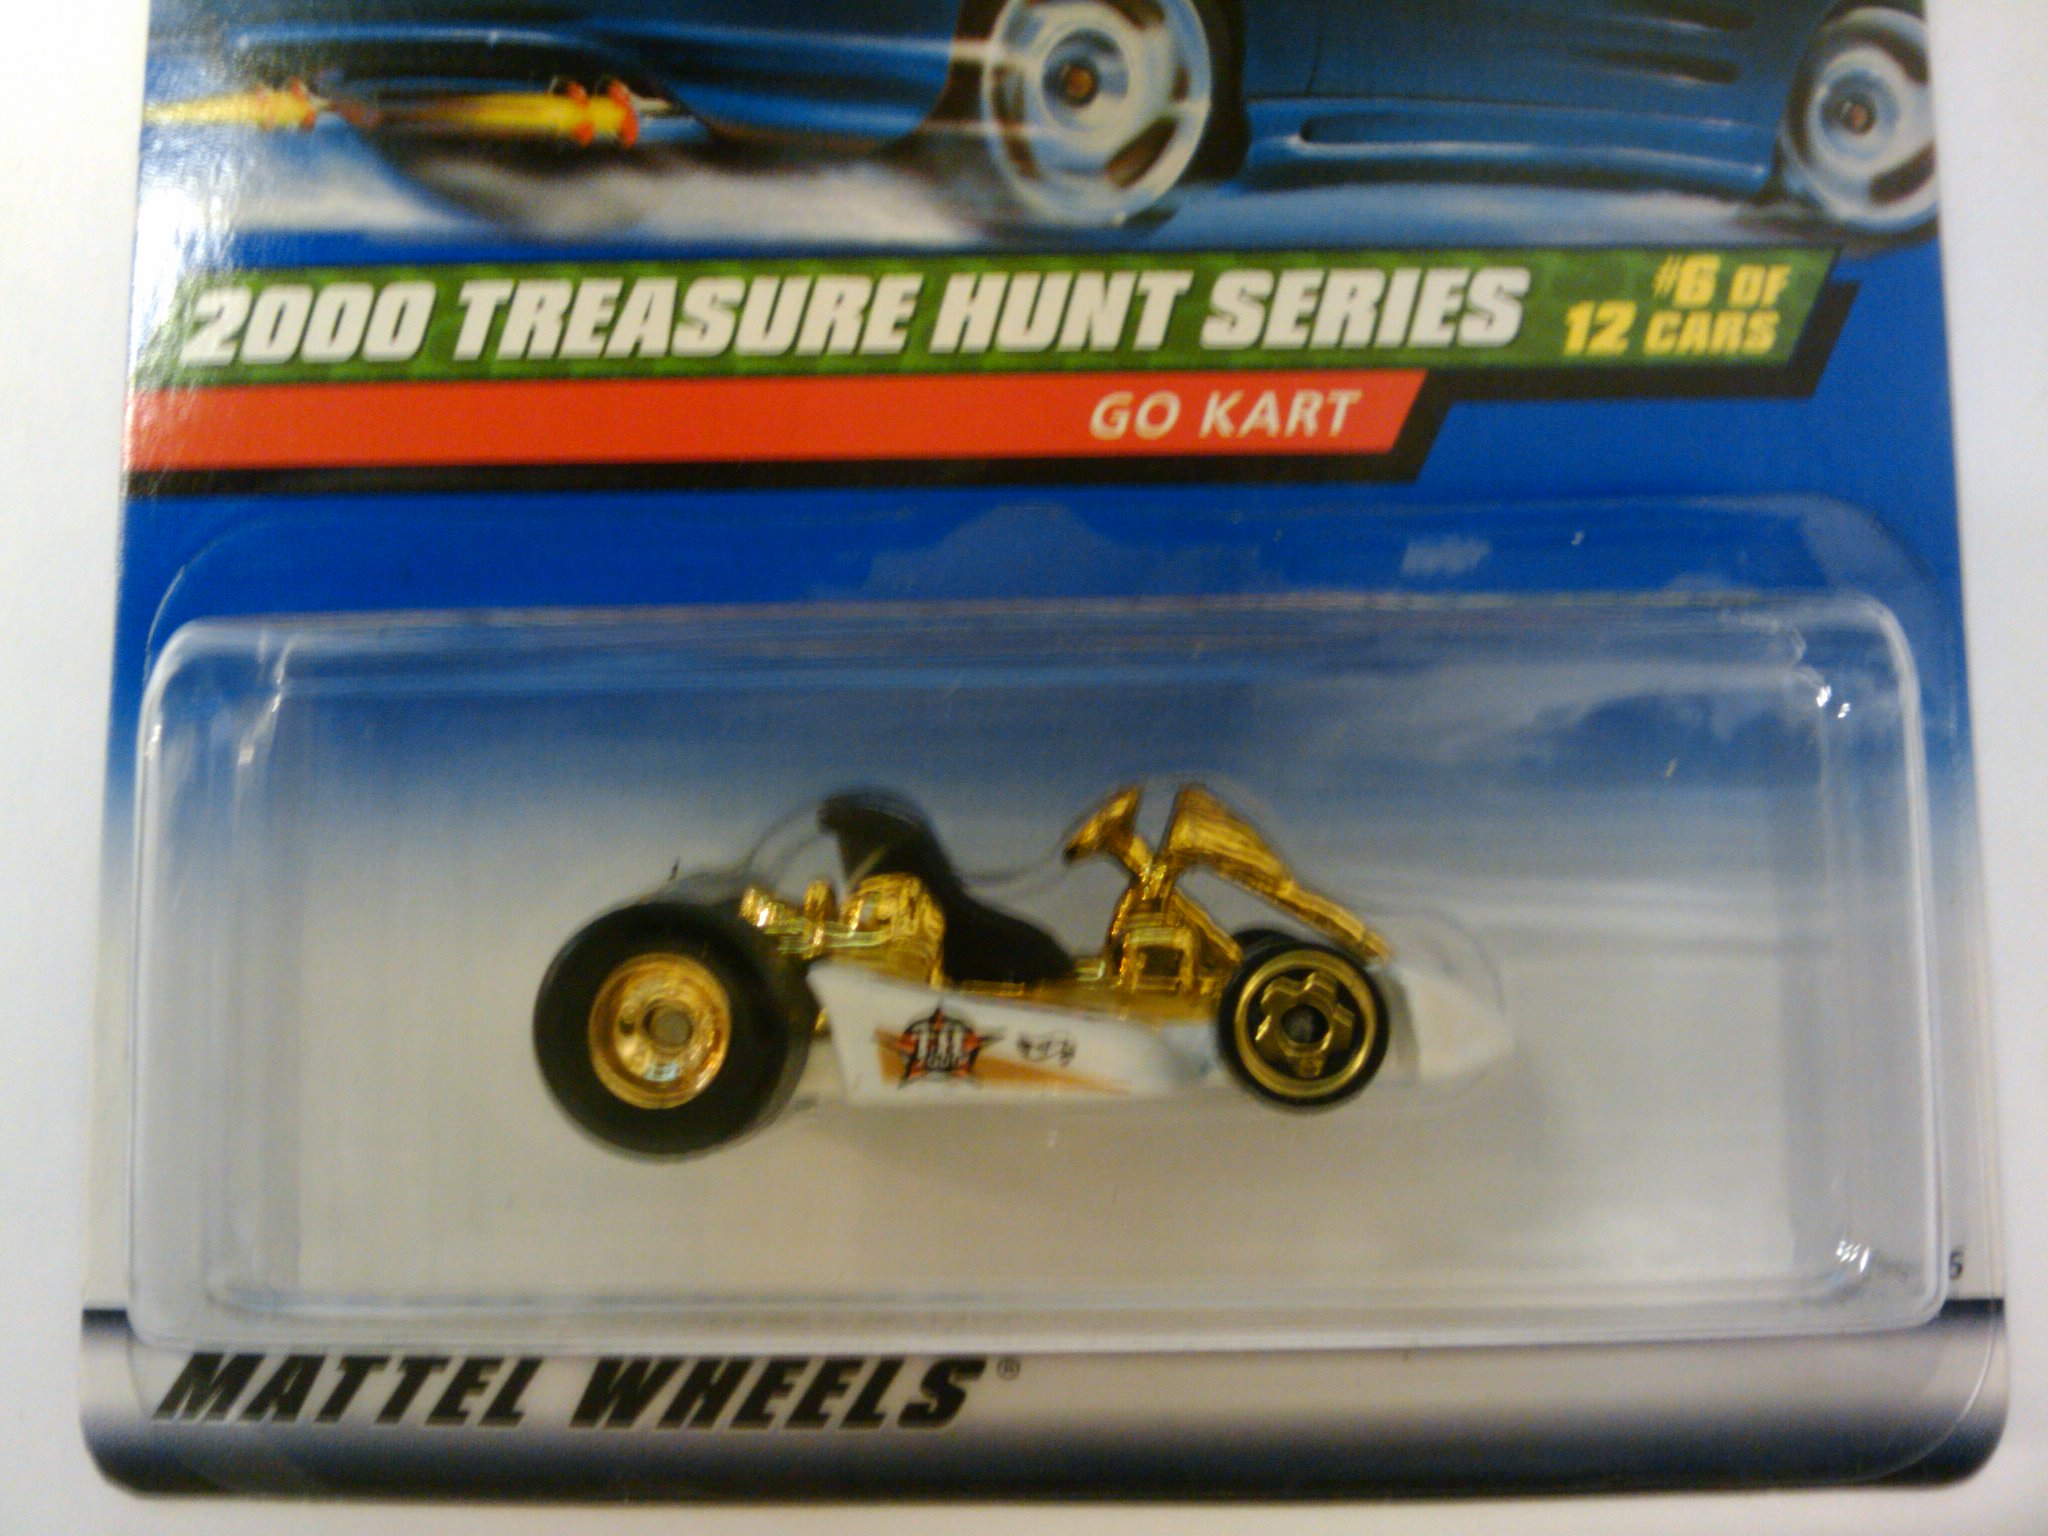 Image 2000 Treasure Hunt Go Kartjpg Hot Wheels Wiki FANDOM